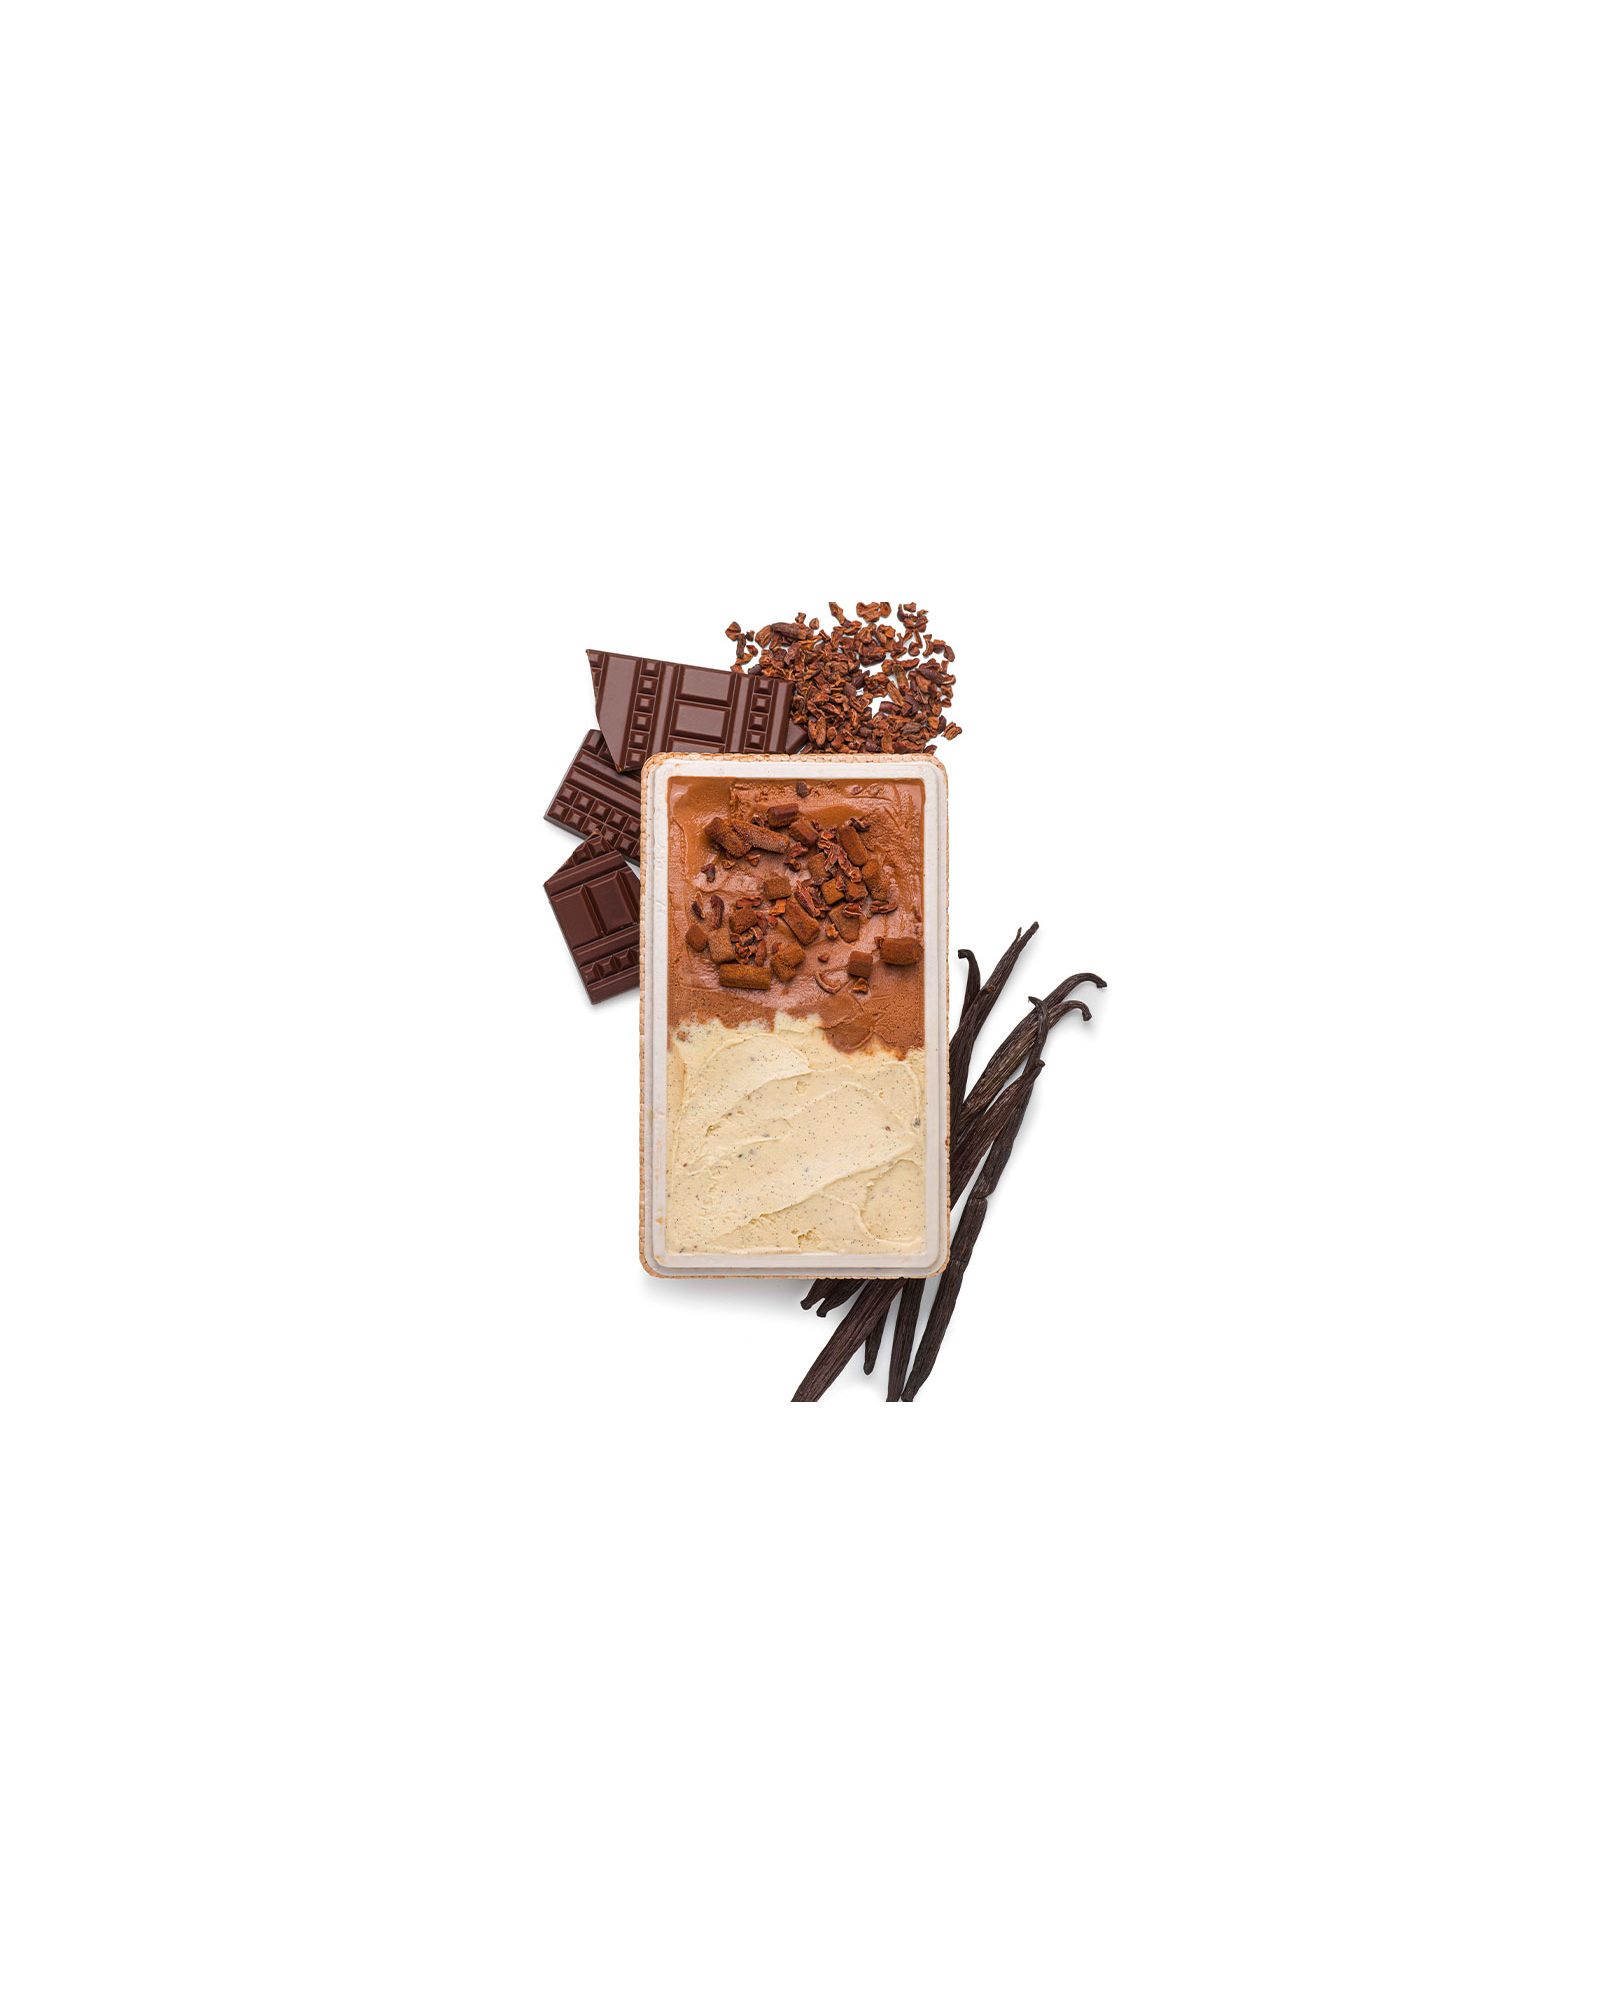 Three Vanillas - Peru Chocolate gelatos